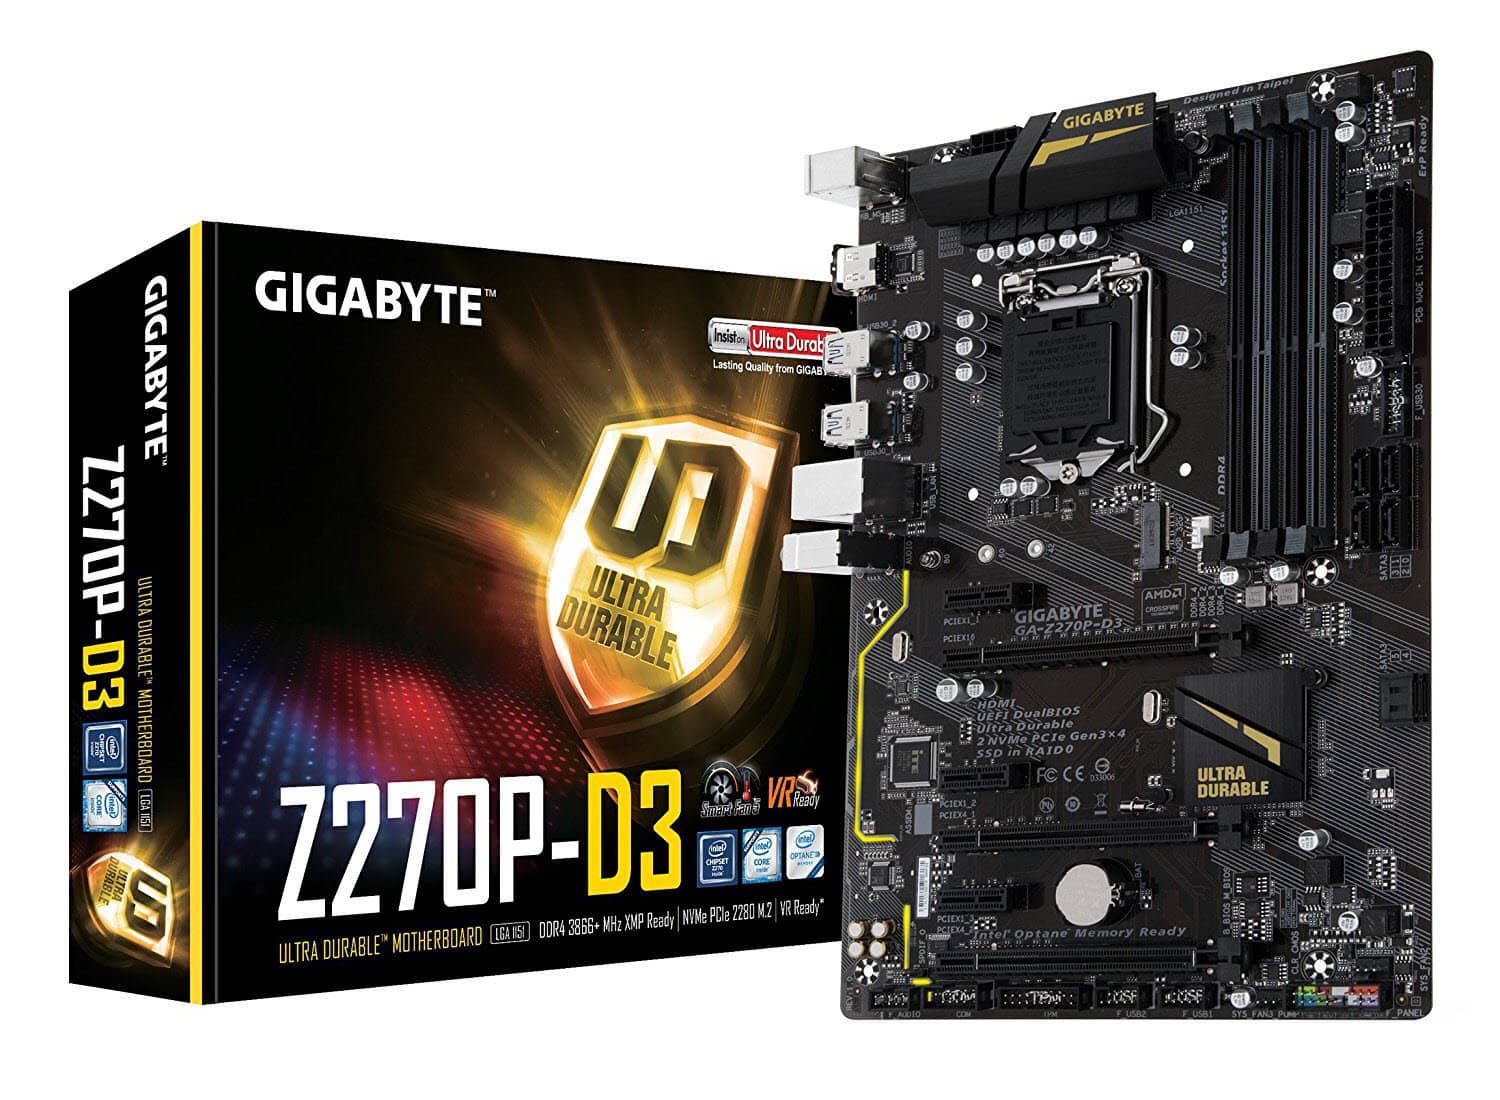 GIGABYTE GA-Z270P-D3 LGA1151 Intel Z270 2-Way Crossfire ATX DDR4 Motherboard